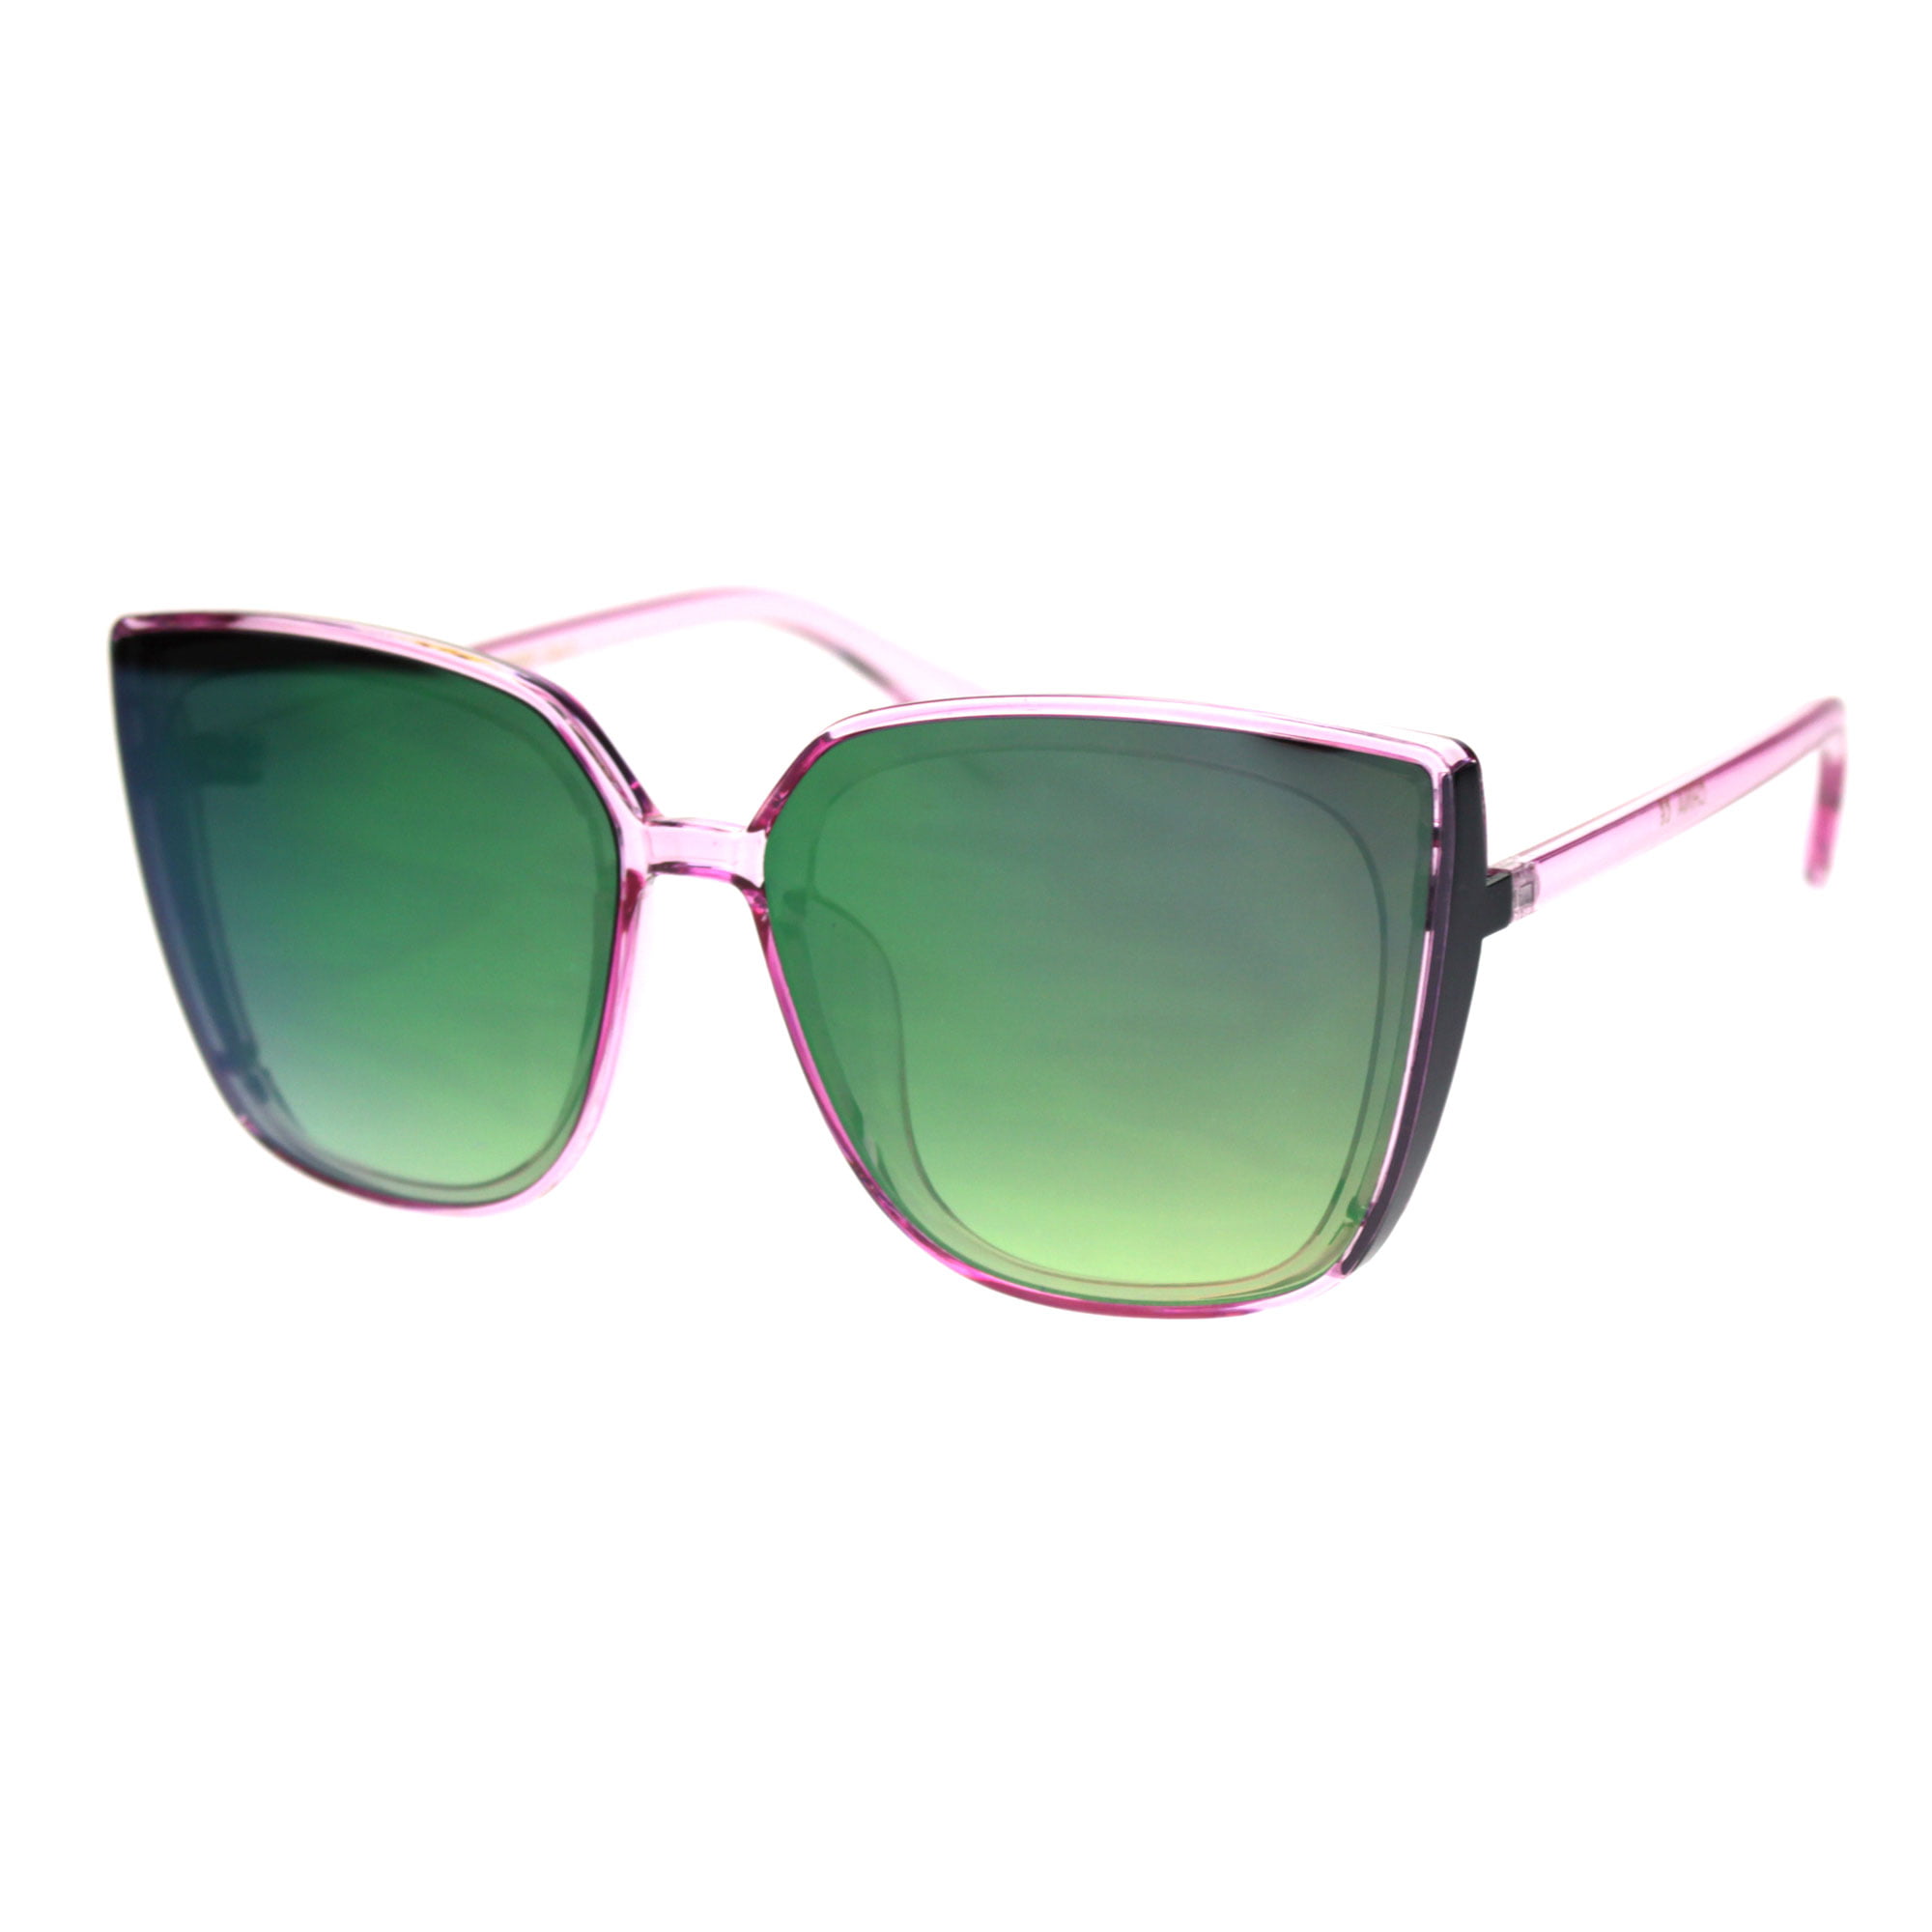 Womens Squared Oversize Rectangular Cat Eye Chic Diva Sunglasses Black Green Mirror